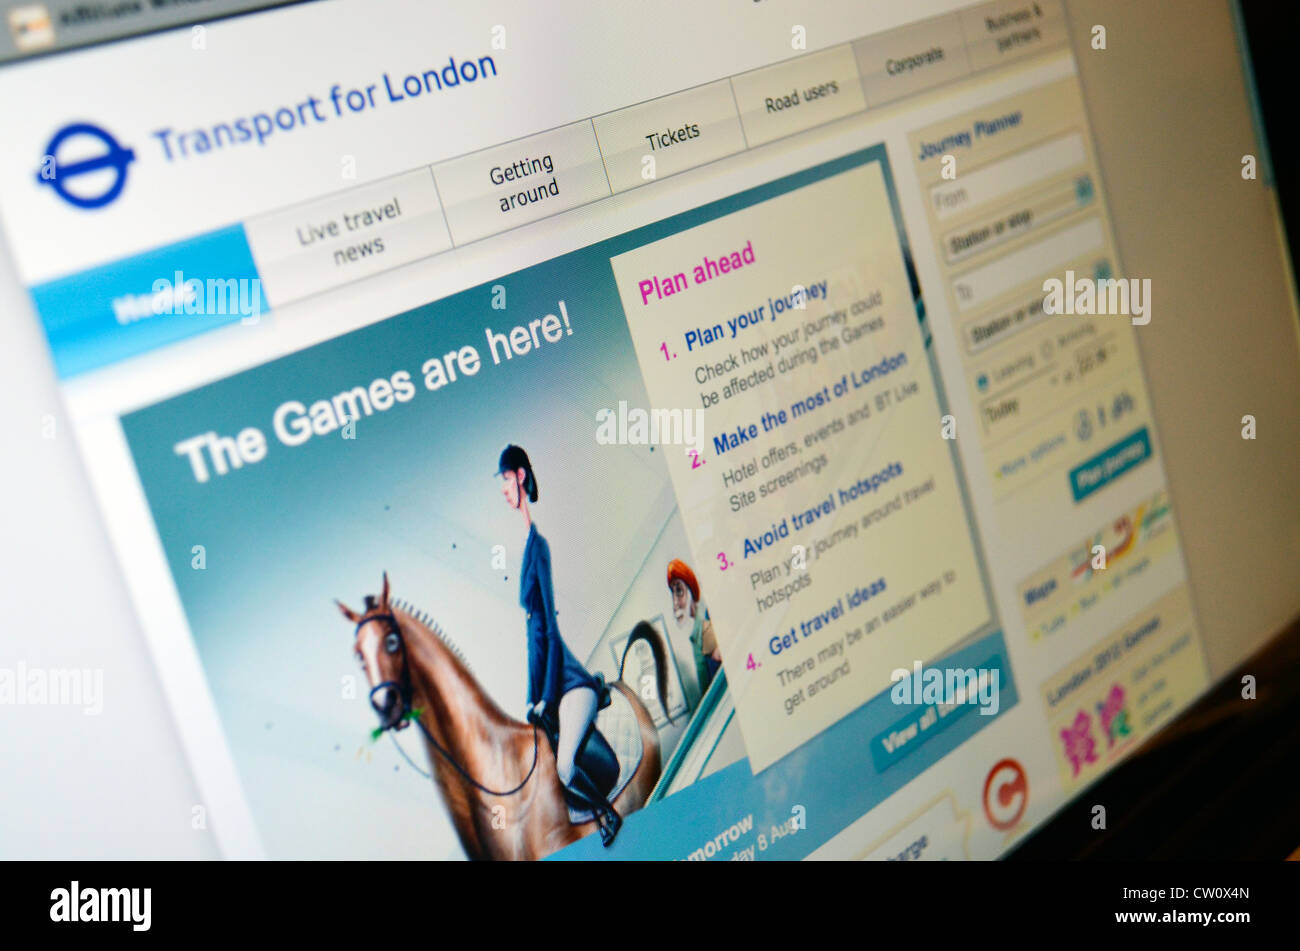 TFL - Transport for London website landscape photo Stock Photo